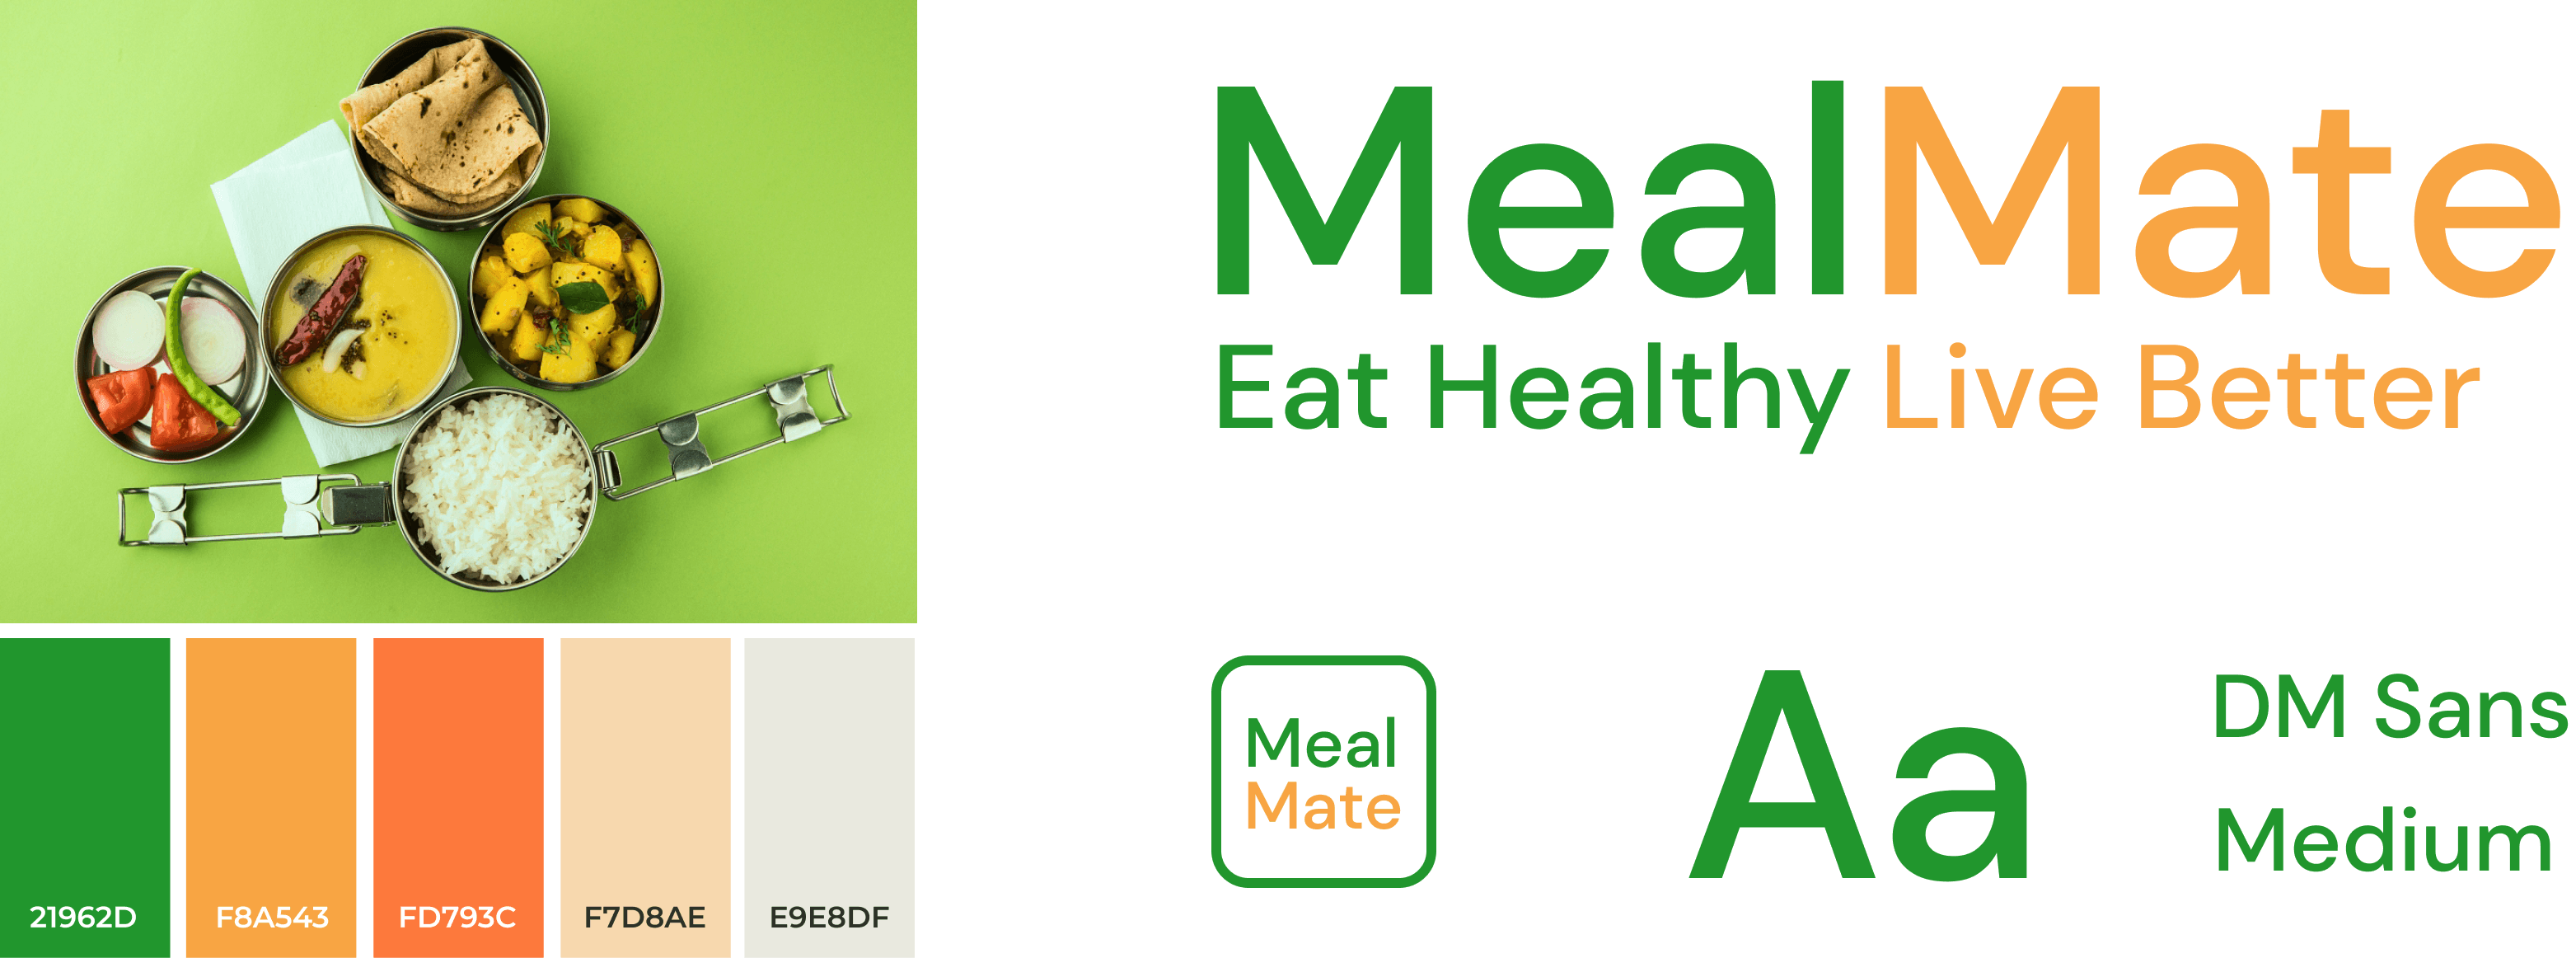 Mealmate color scheme and logo